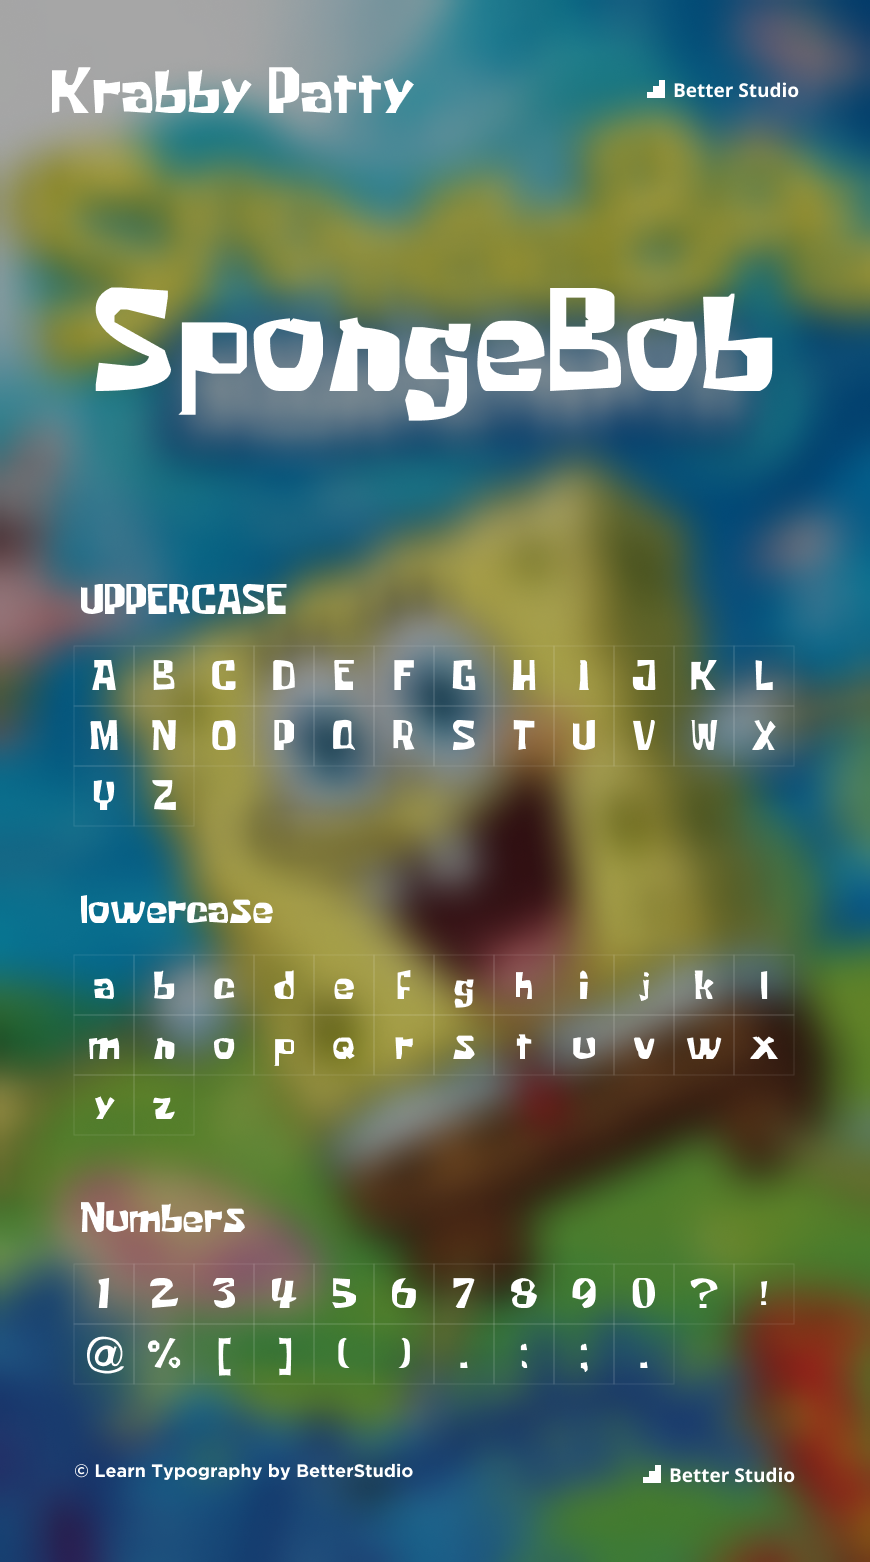 spongebob text art copy and paste